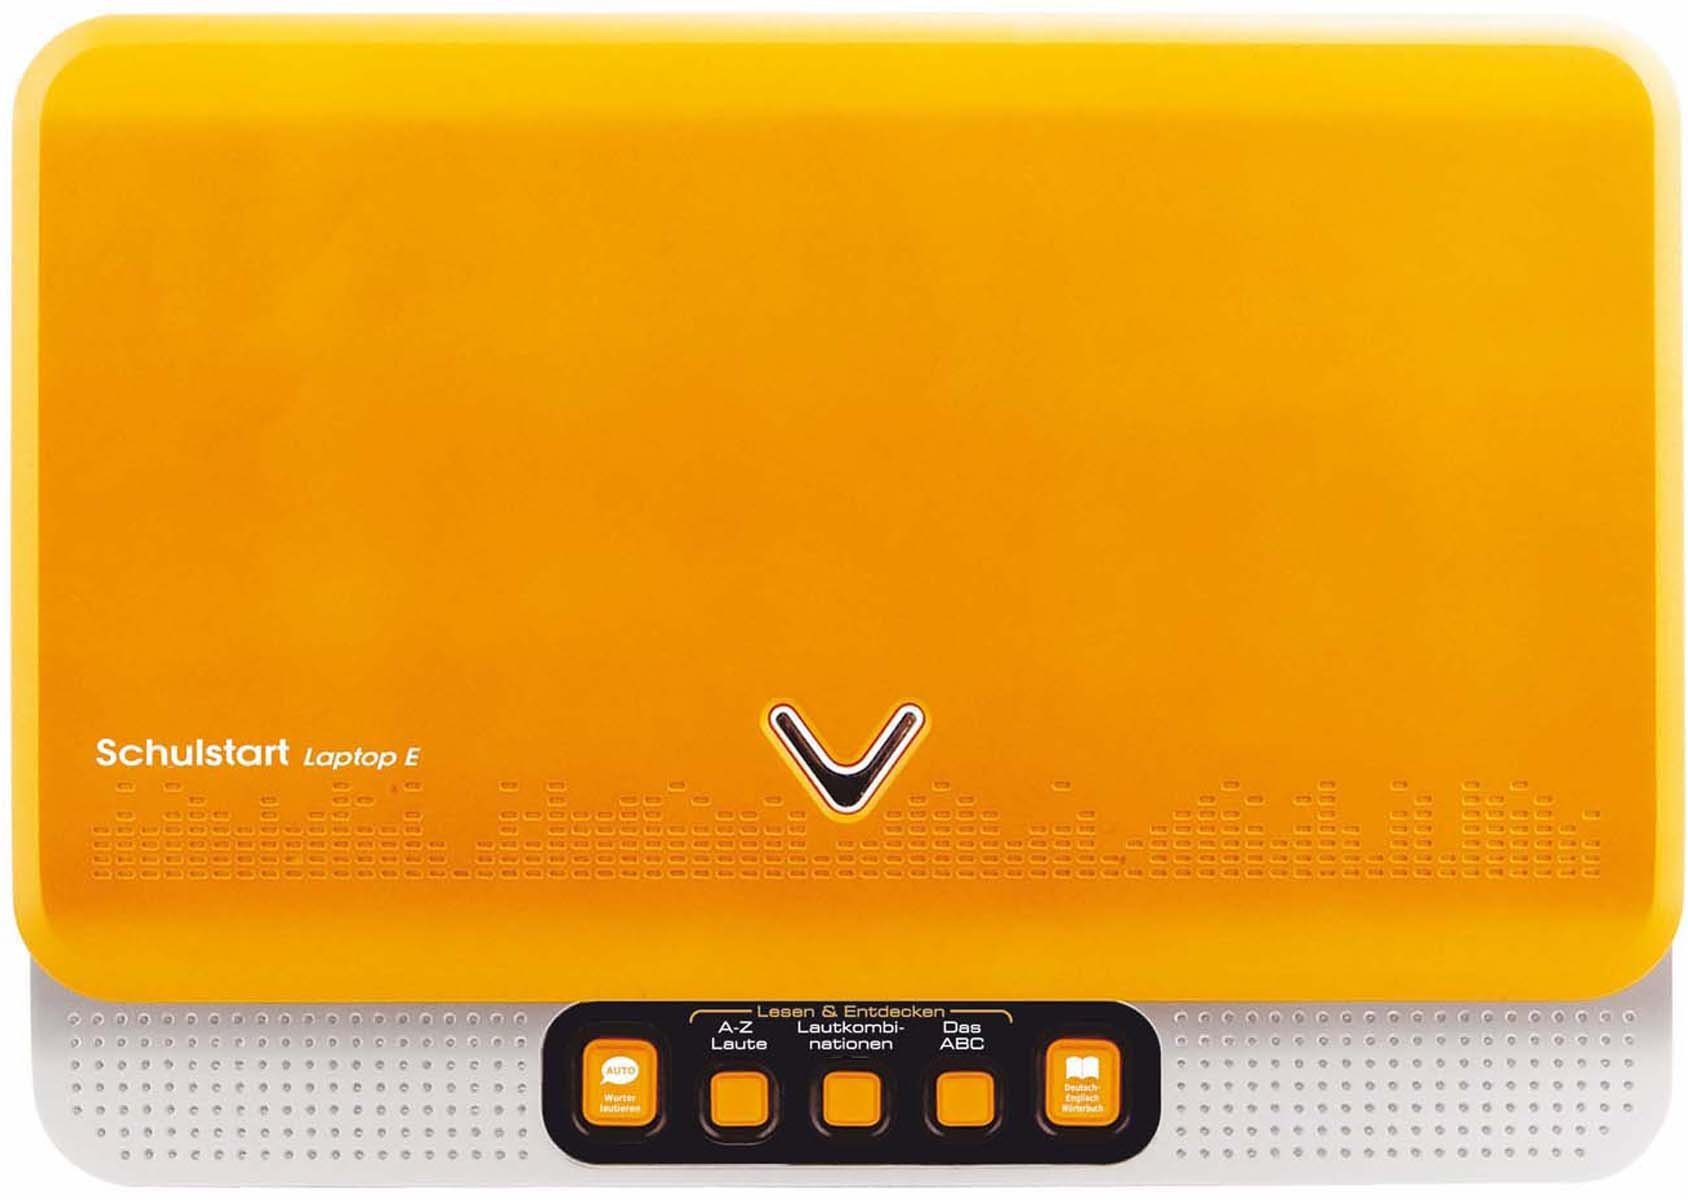 orange School E Laptop Schulstart & Vtech® Go, Kindercomputer -